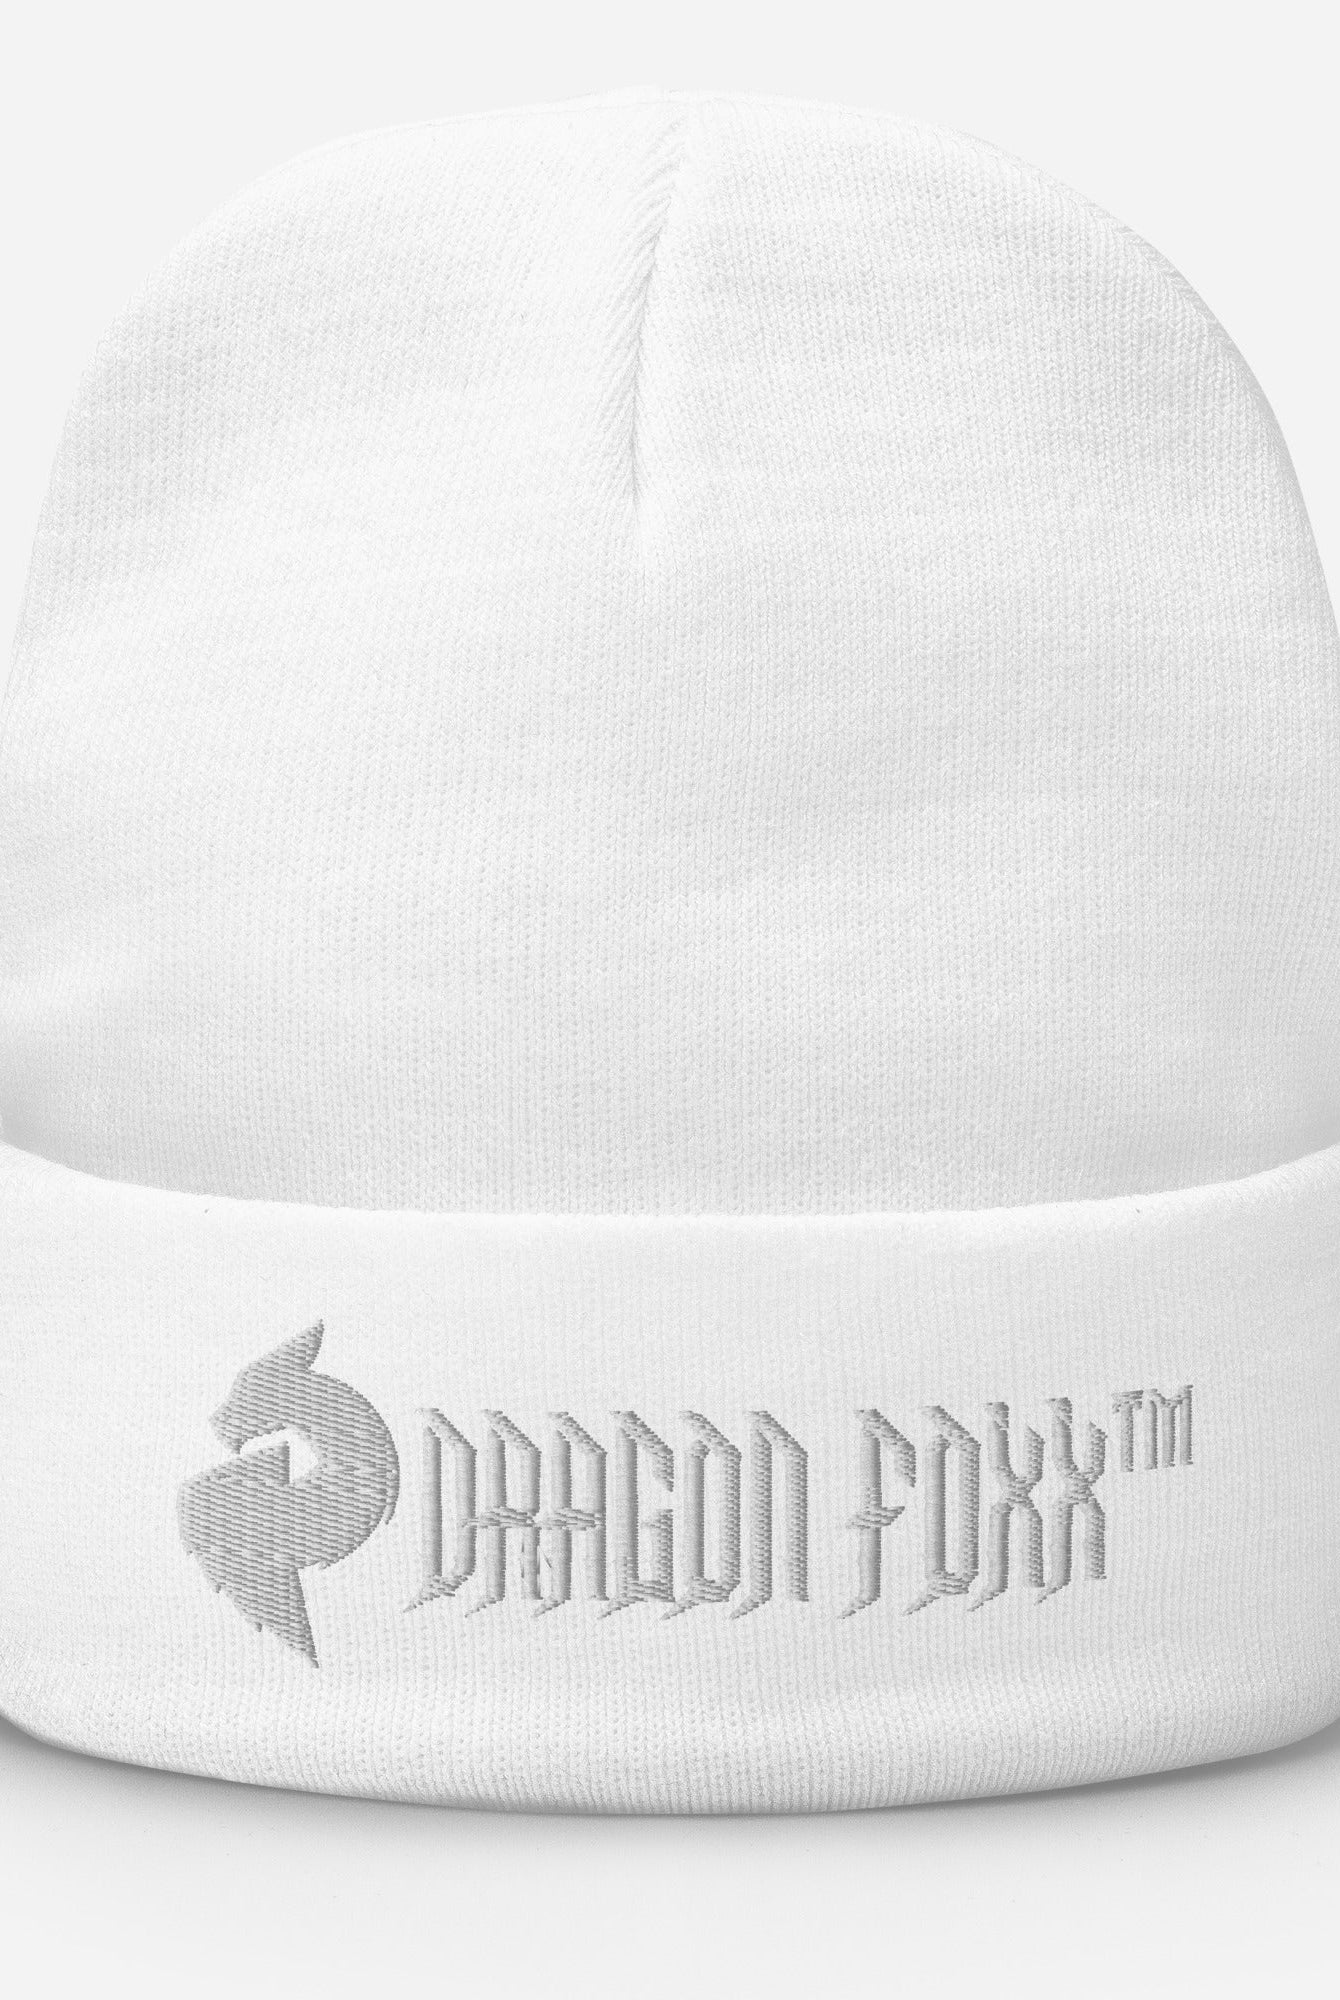 His or Hers Dragon Foxx™ Embroidered Beanie in 6 Colors - Dragon Foxx™ Embroidered Beanie - DRAGON FOXX™ - His or Hers Dragon Foxx™ Embroidered Beanie in 6 Colors - 9861092_4525 - White - - Beanies - Black Beanie - Dark Green Beanie